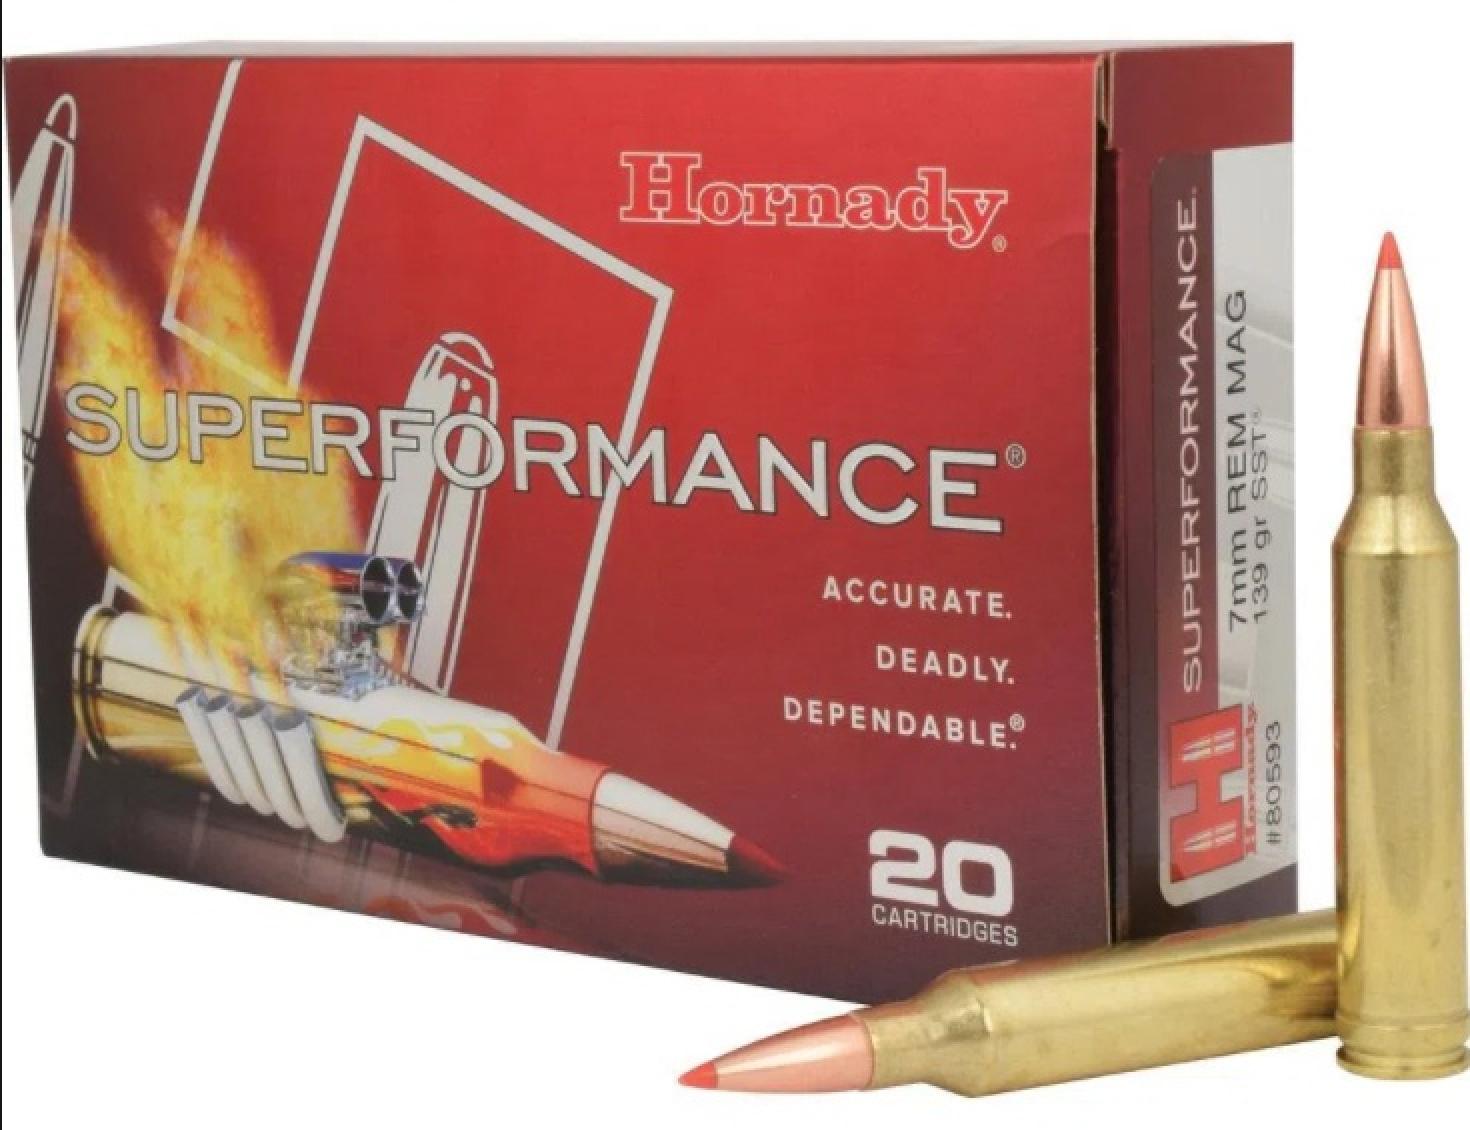 Hornady Superformance 7mm Remington Magnum 139 grain SST